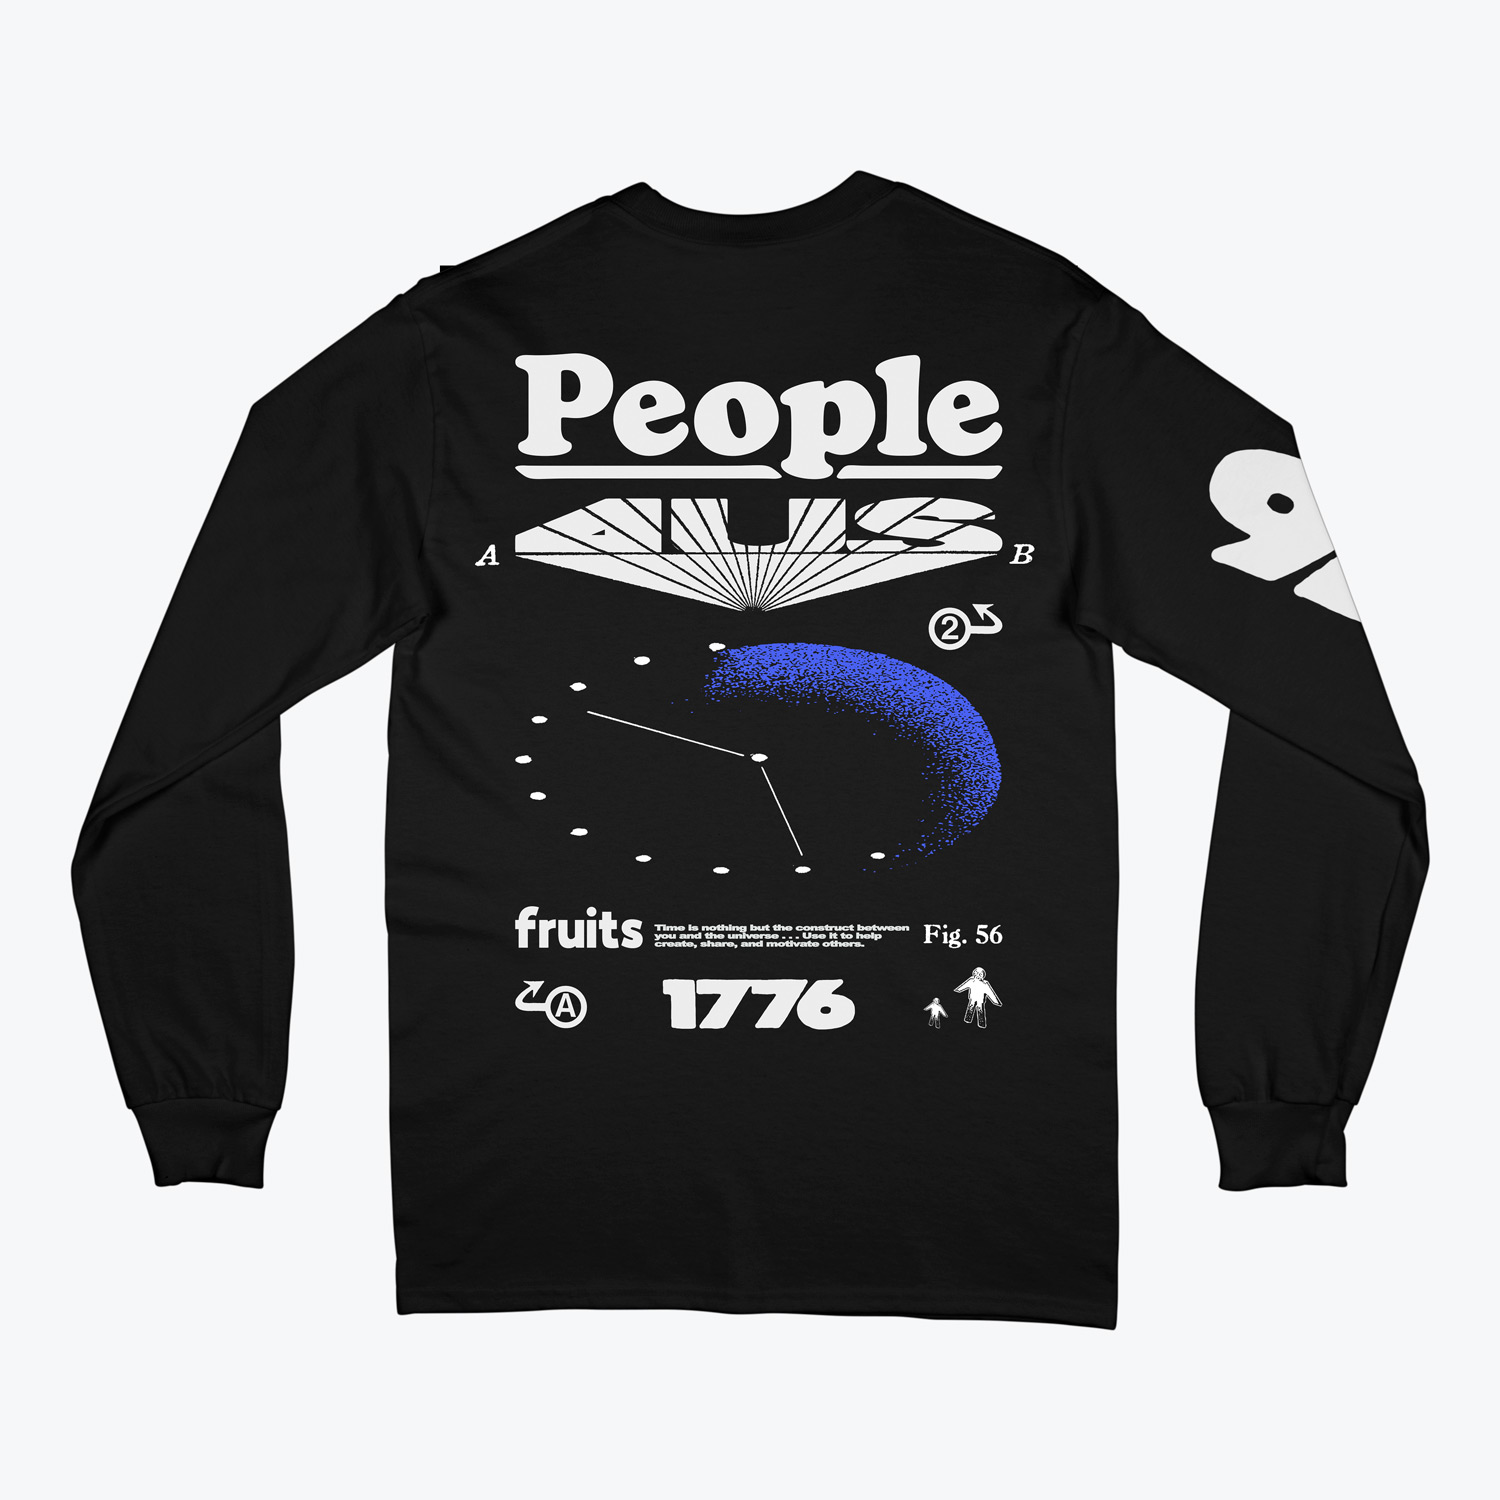 Fruits Art Club's 'PEOPLE 4US' T-shirt